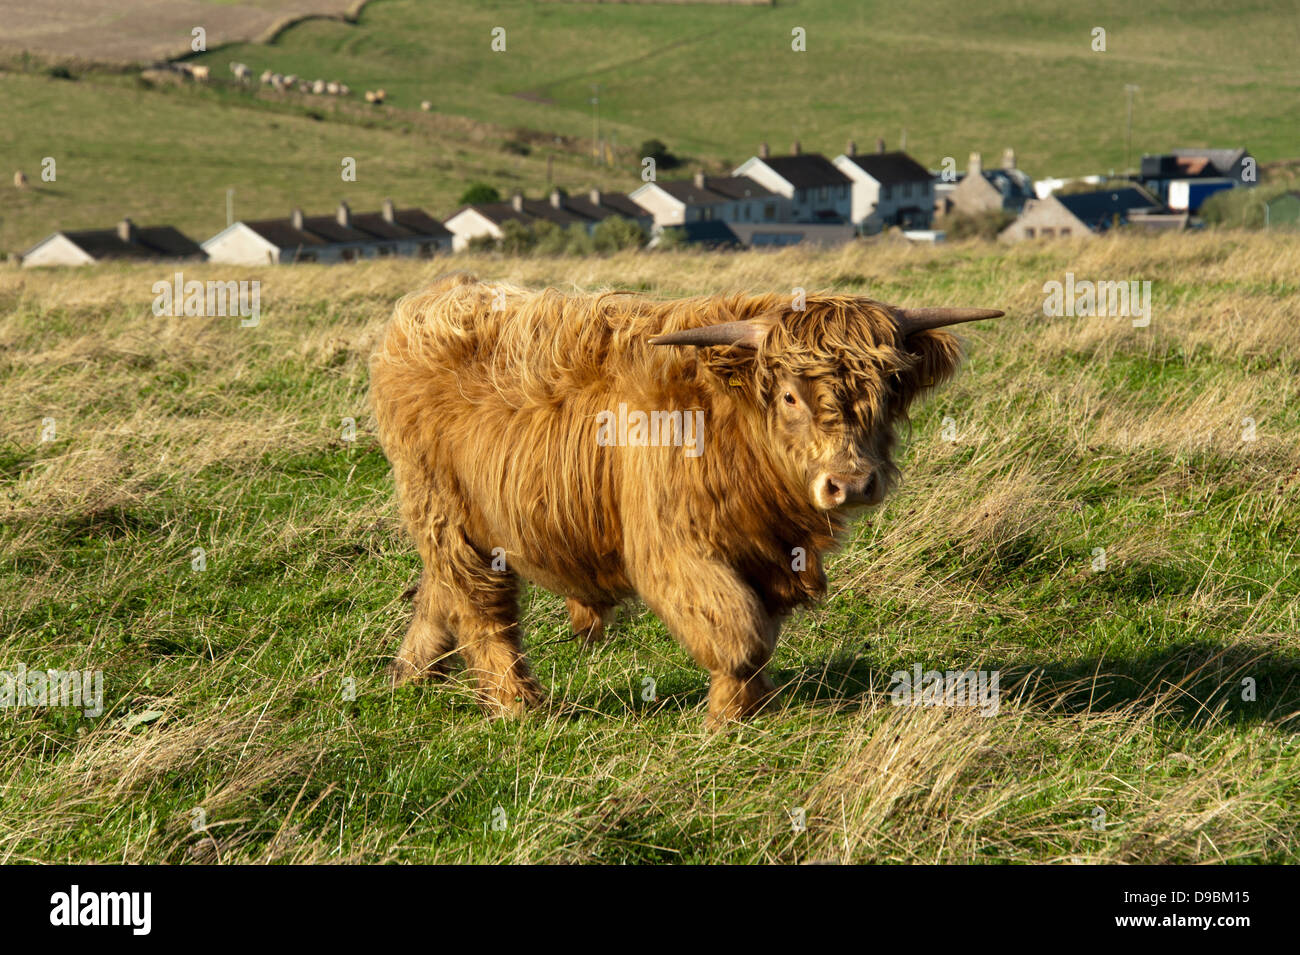 Scottish Highland ganado, Escocia, Gran Bretaña, Europa, Galloway , Schottisches Hochlandrind, Schottland, Grossbritannien, UE Foto de stock